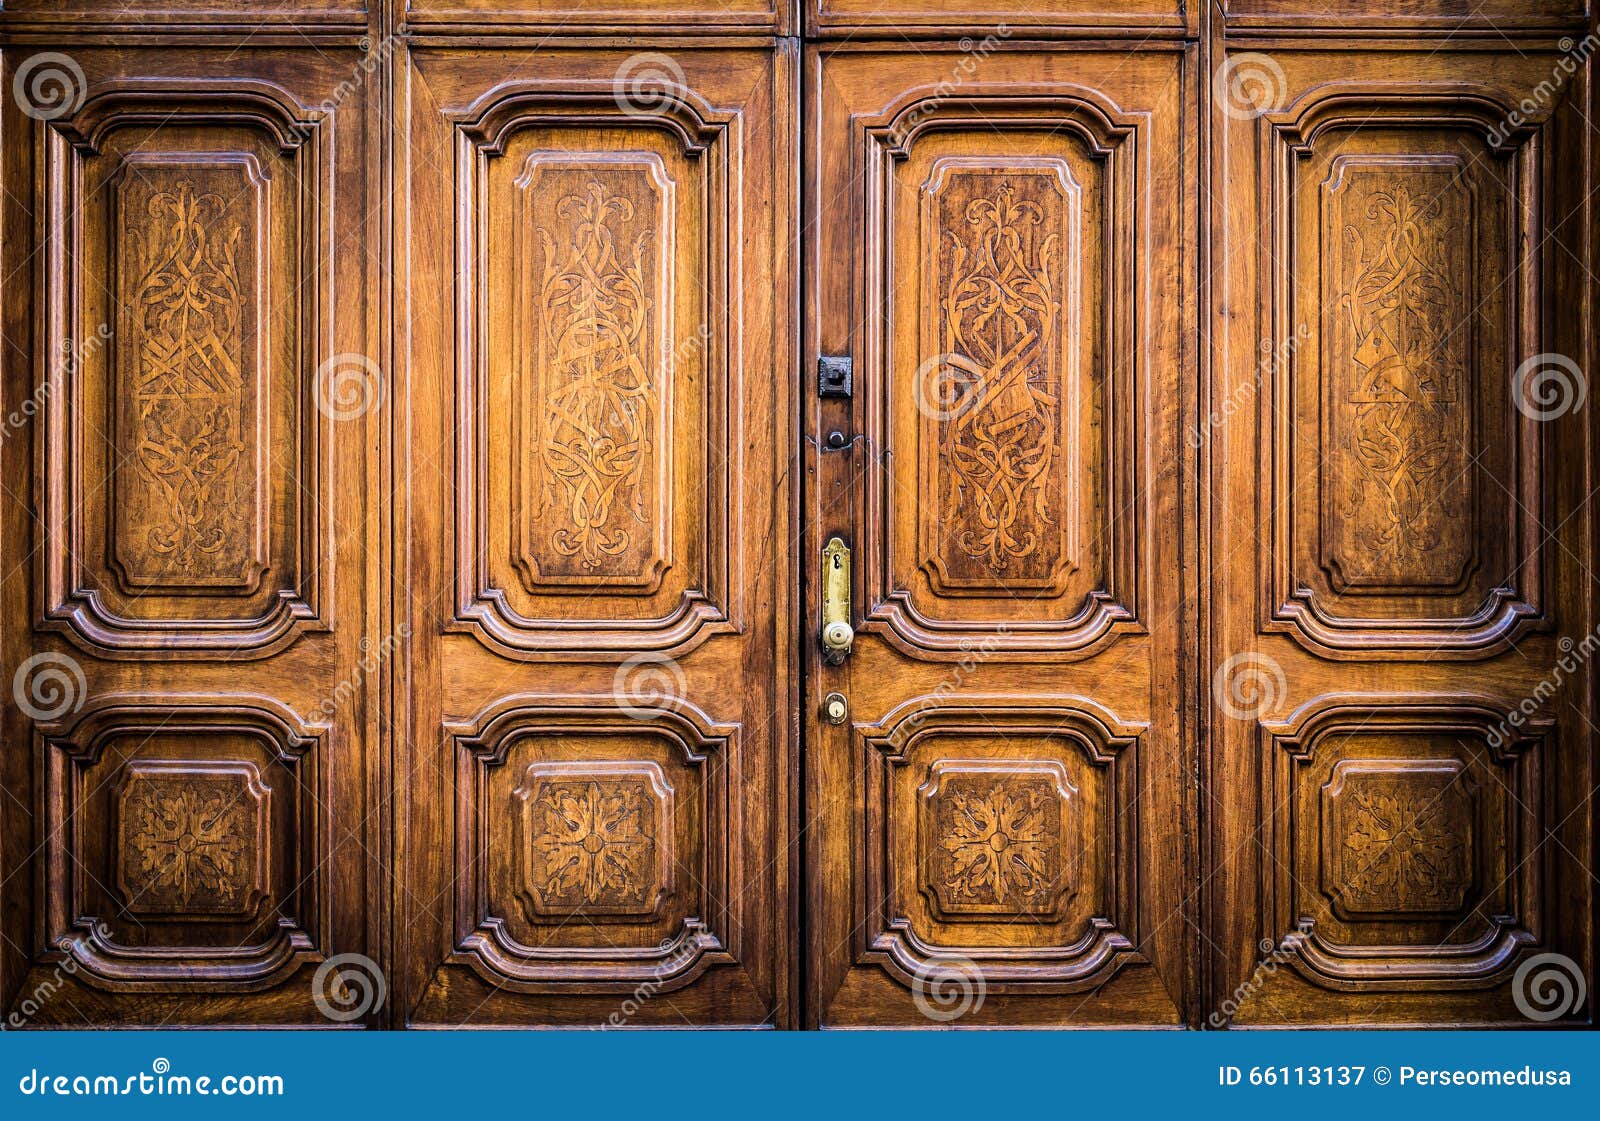 freemasonry door entrance